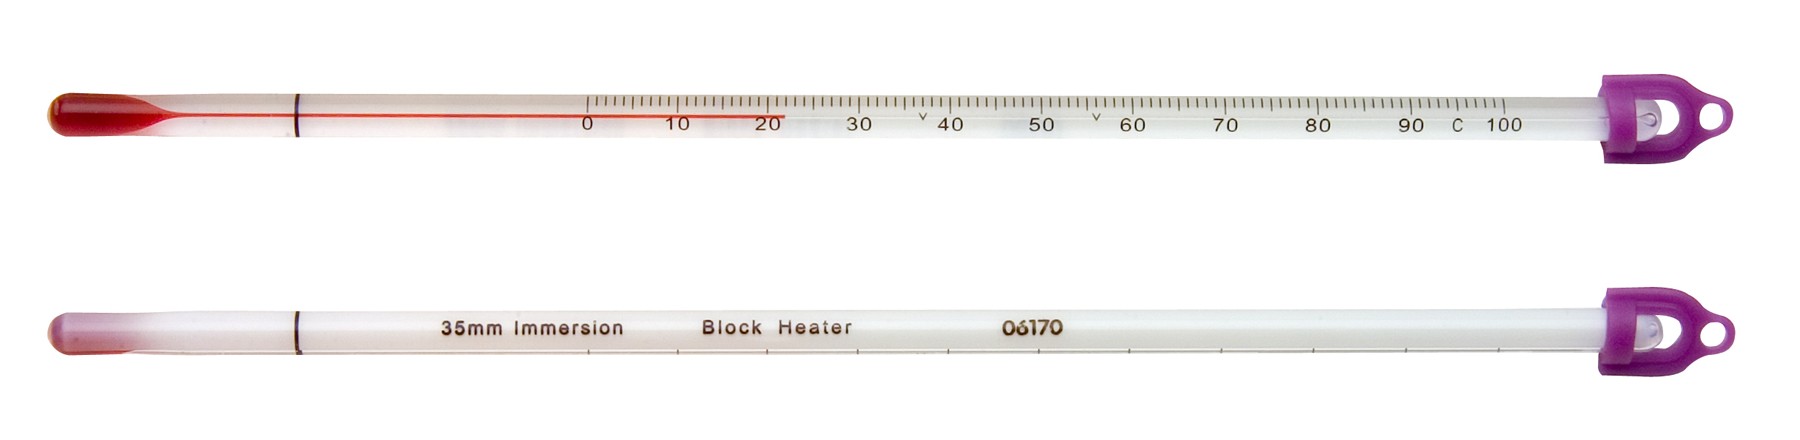 SP Bel-Art, H-B DURAC Dry Block/Incubator Liquid-In-Glass Thermometer; 0 to 100C, 35mm Immersion, Organic Liquid Fill